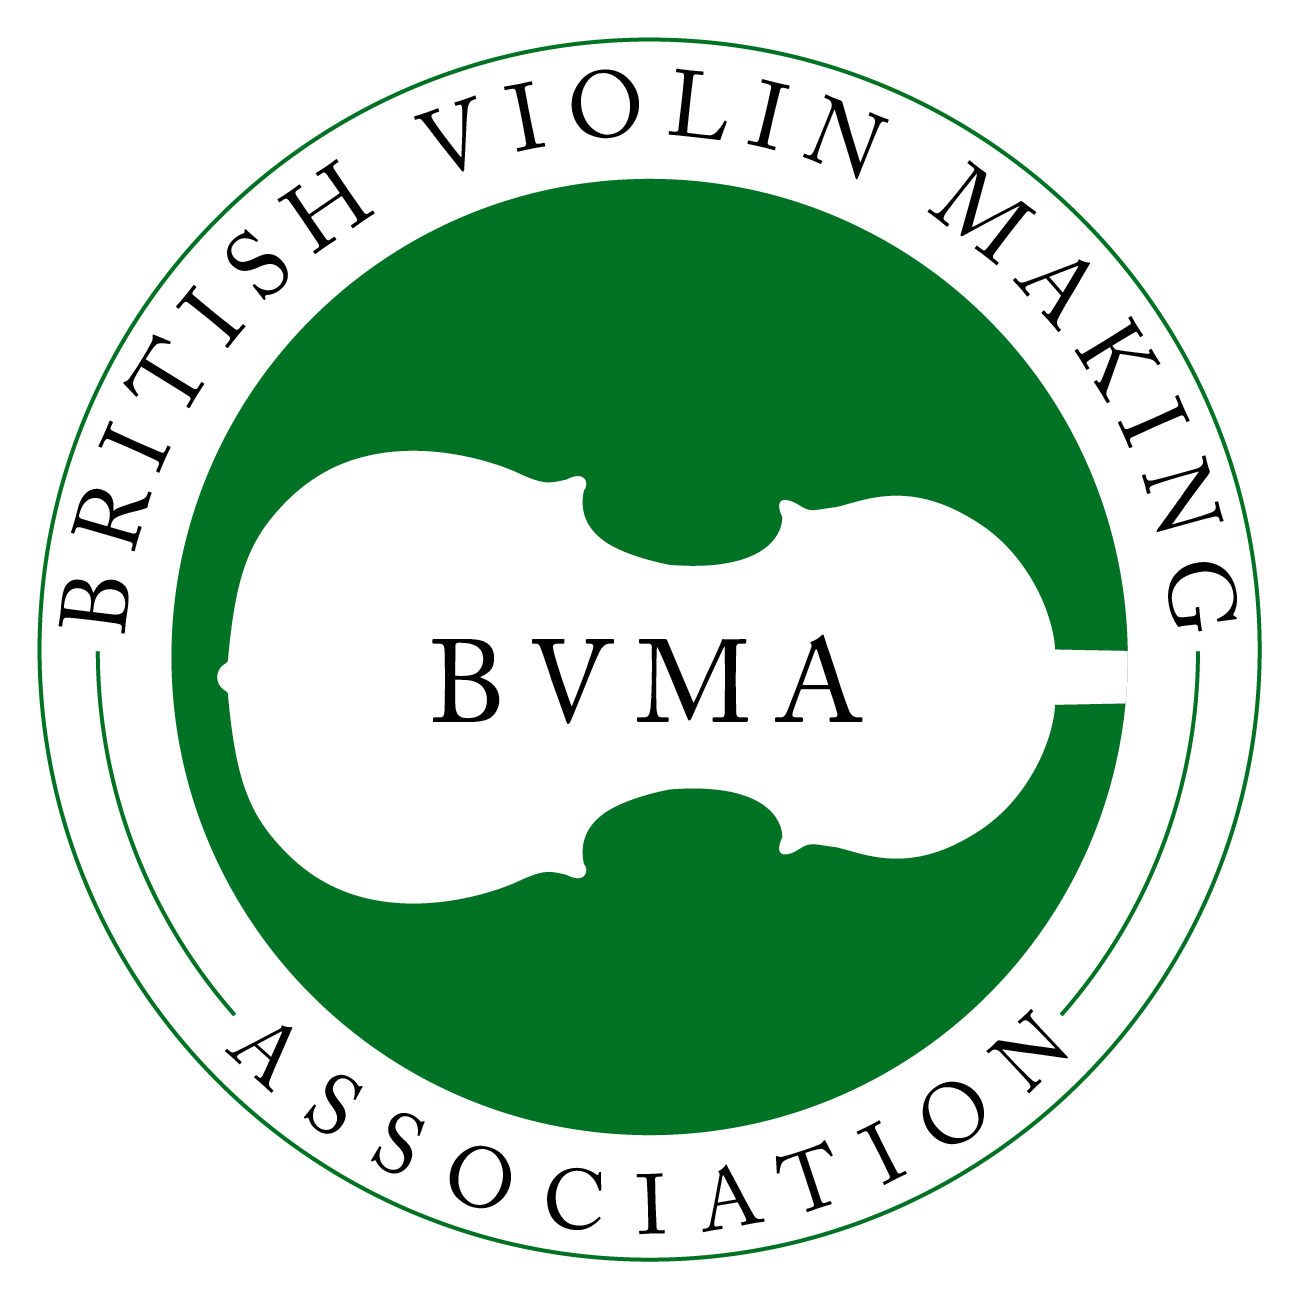 (c) Bvma.org.uk